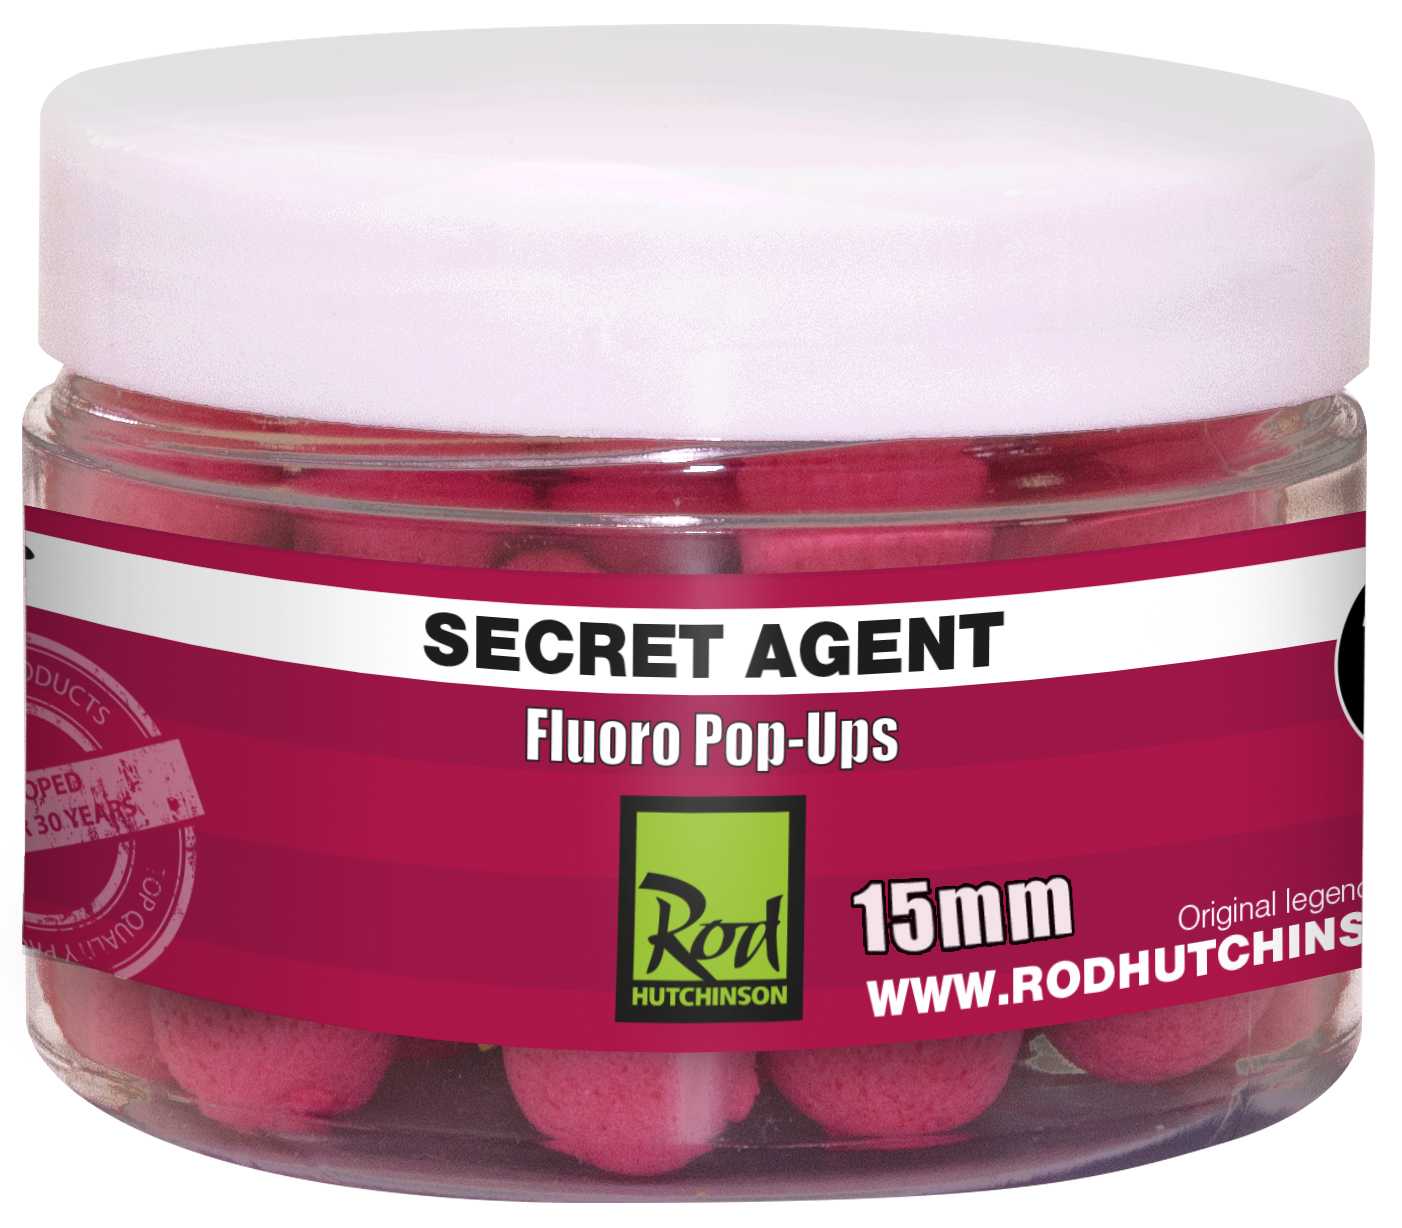 Rod Hutchinson Fluoro Pop-up  15mm aroma: Secret Agent with Liver Liquid